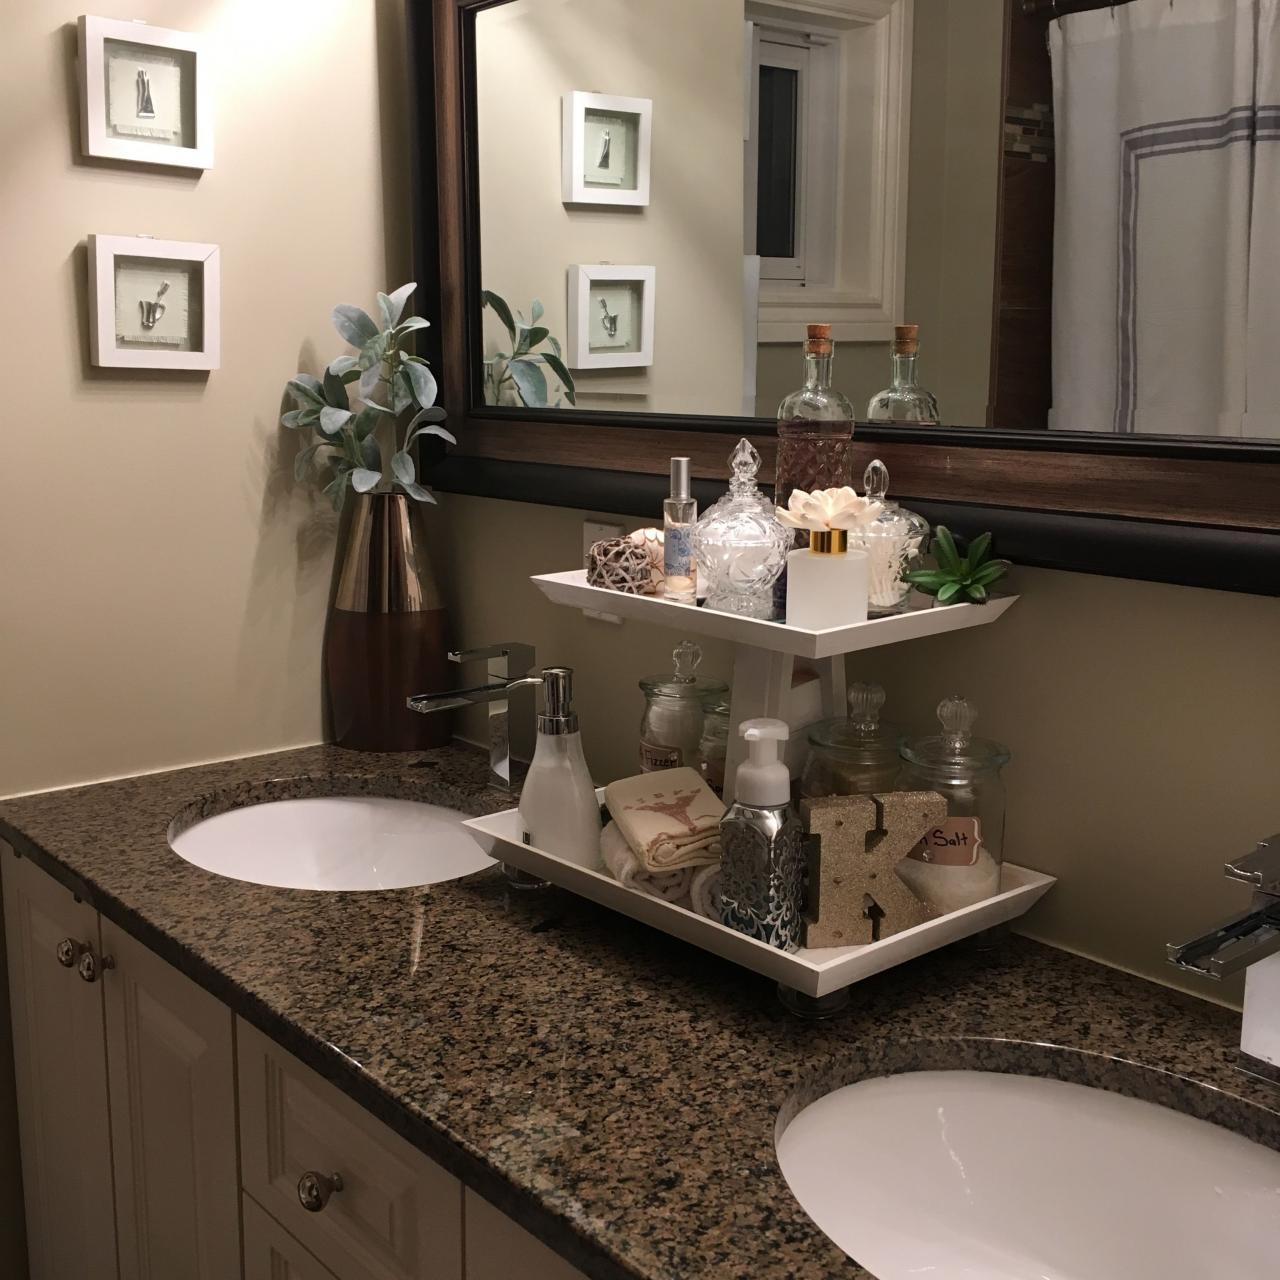 DIY two tiered bathroom tray. Organized my bathroom counter with all my